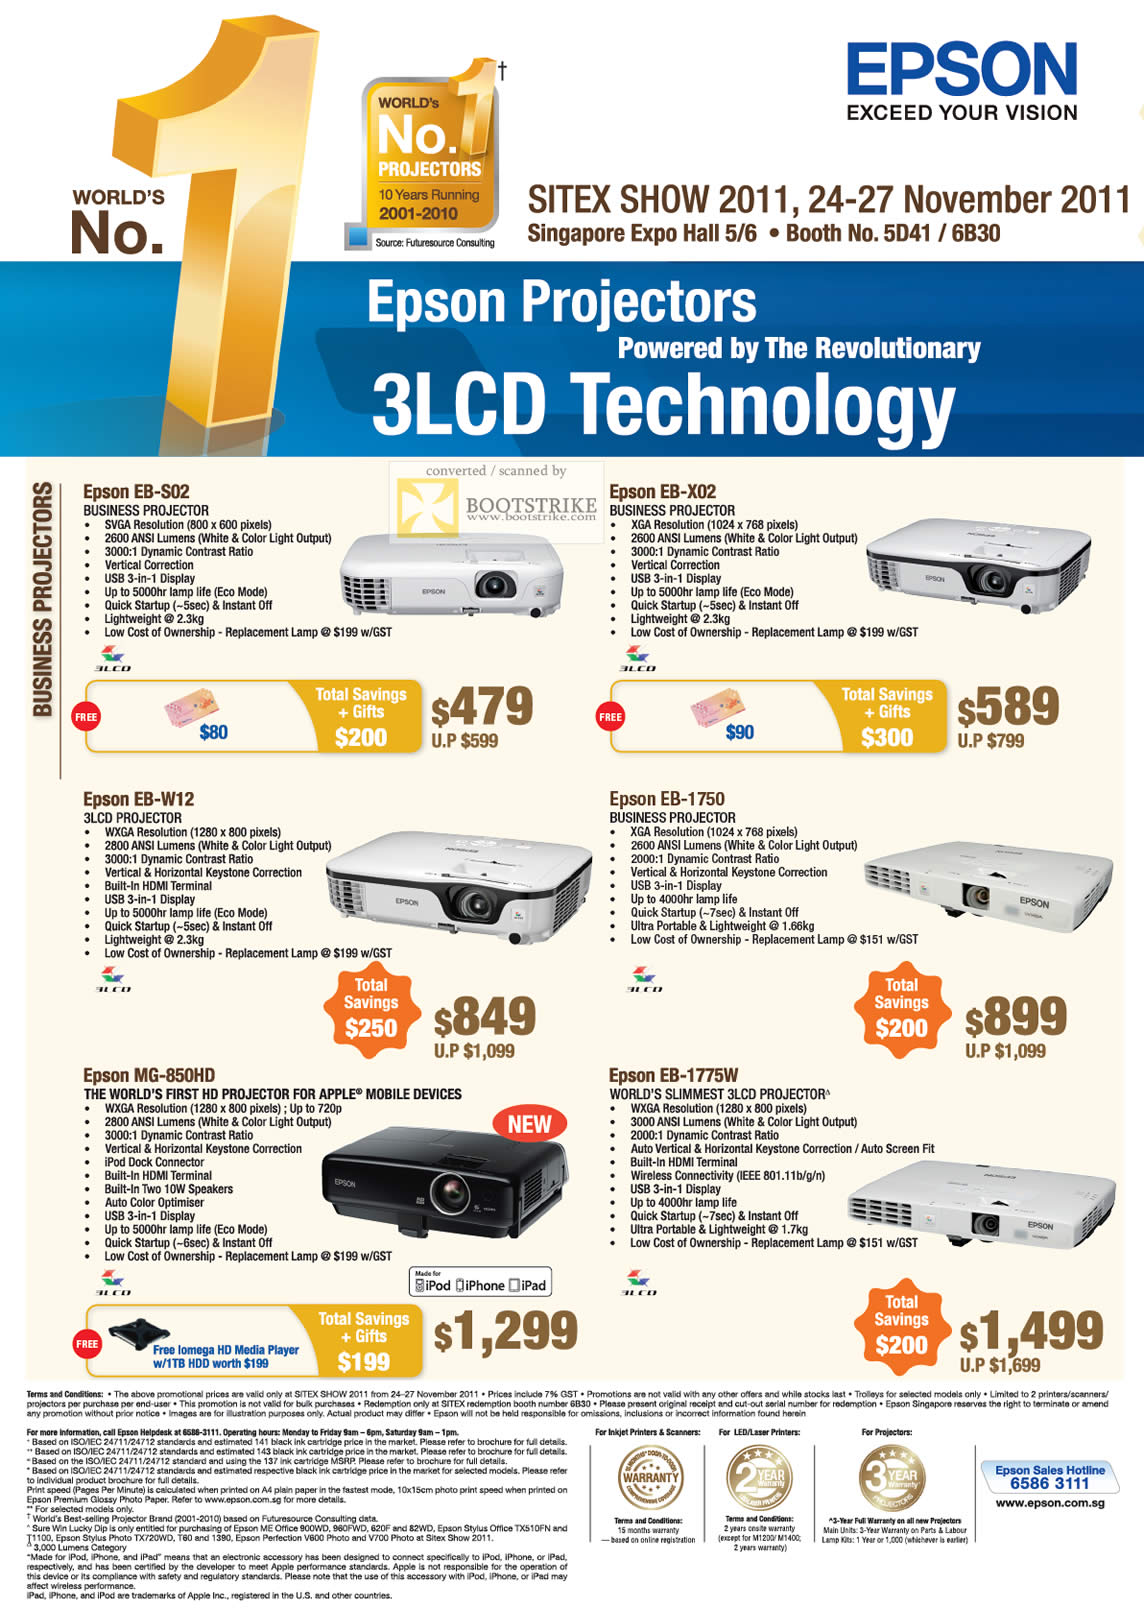 SITEX 2011 price list image brochure of Epson Projectors EB-S02, EB-X02, EB-W12, EB-1750, MG-850HD, EB-1775W